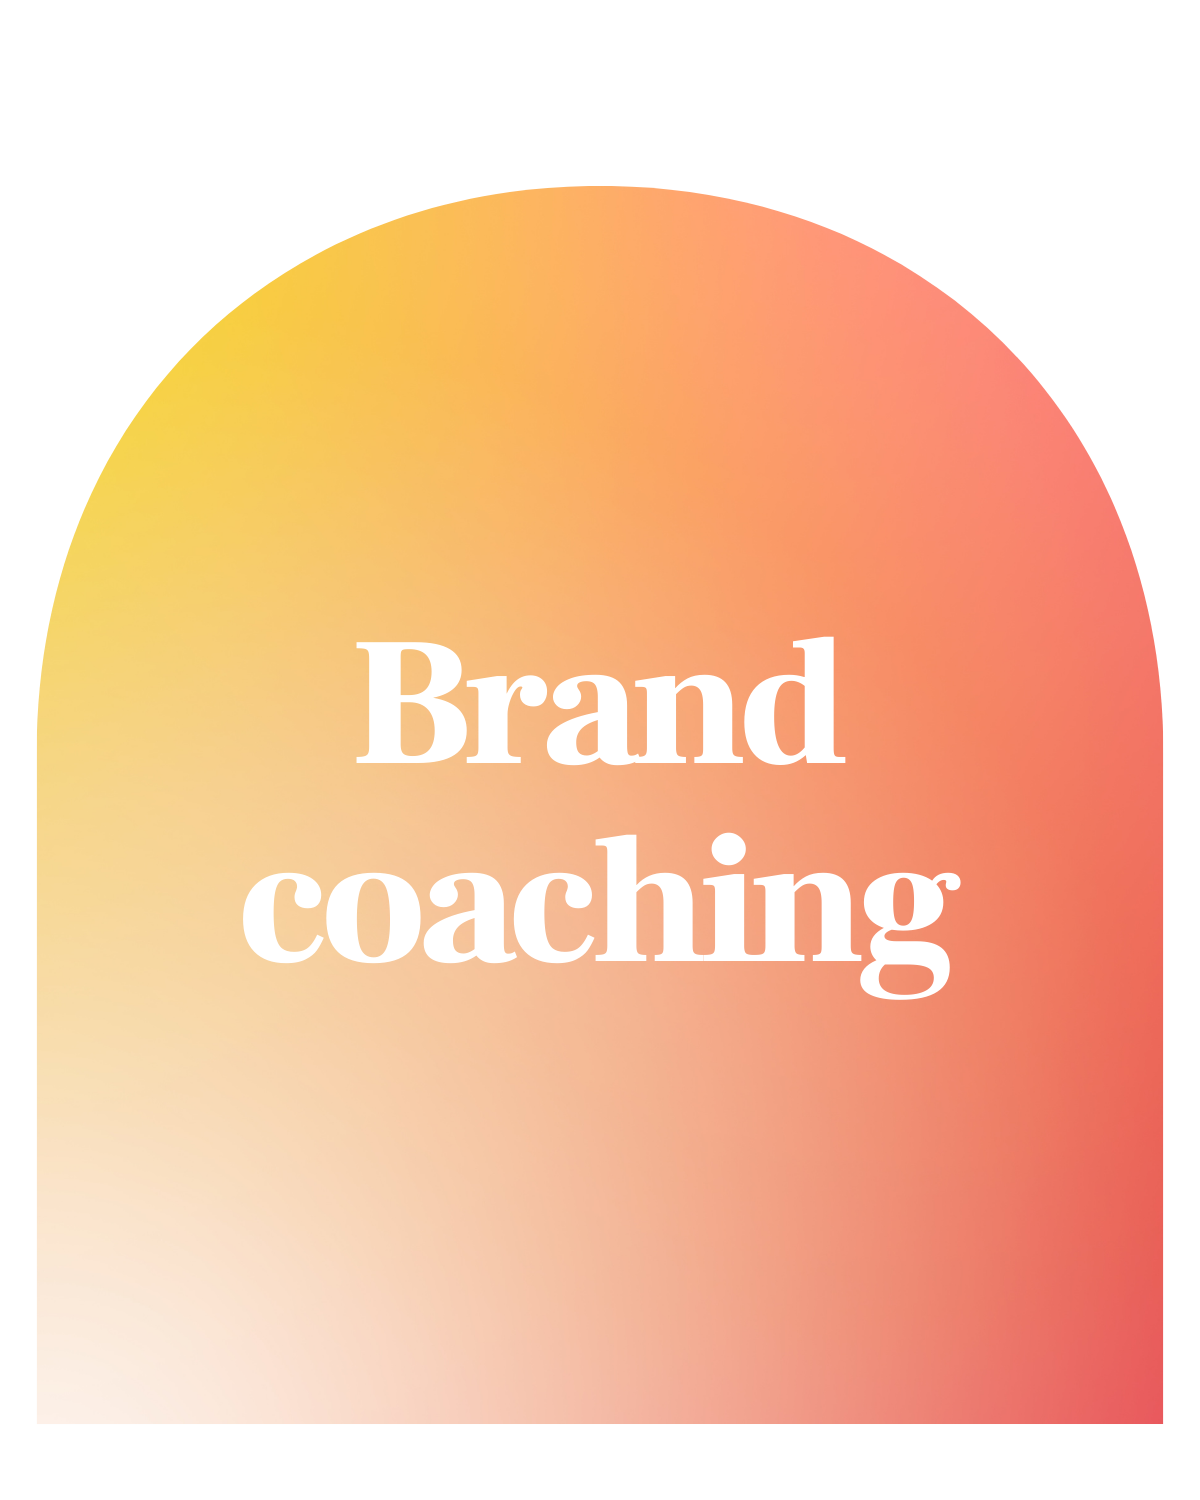 Brand coaching link